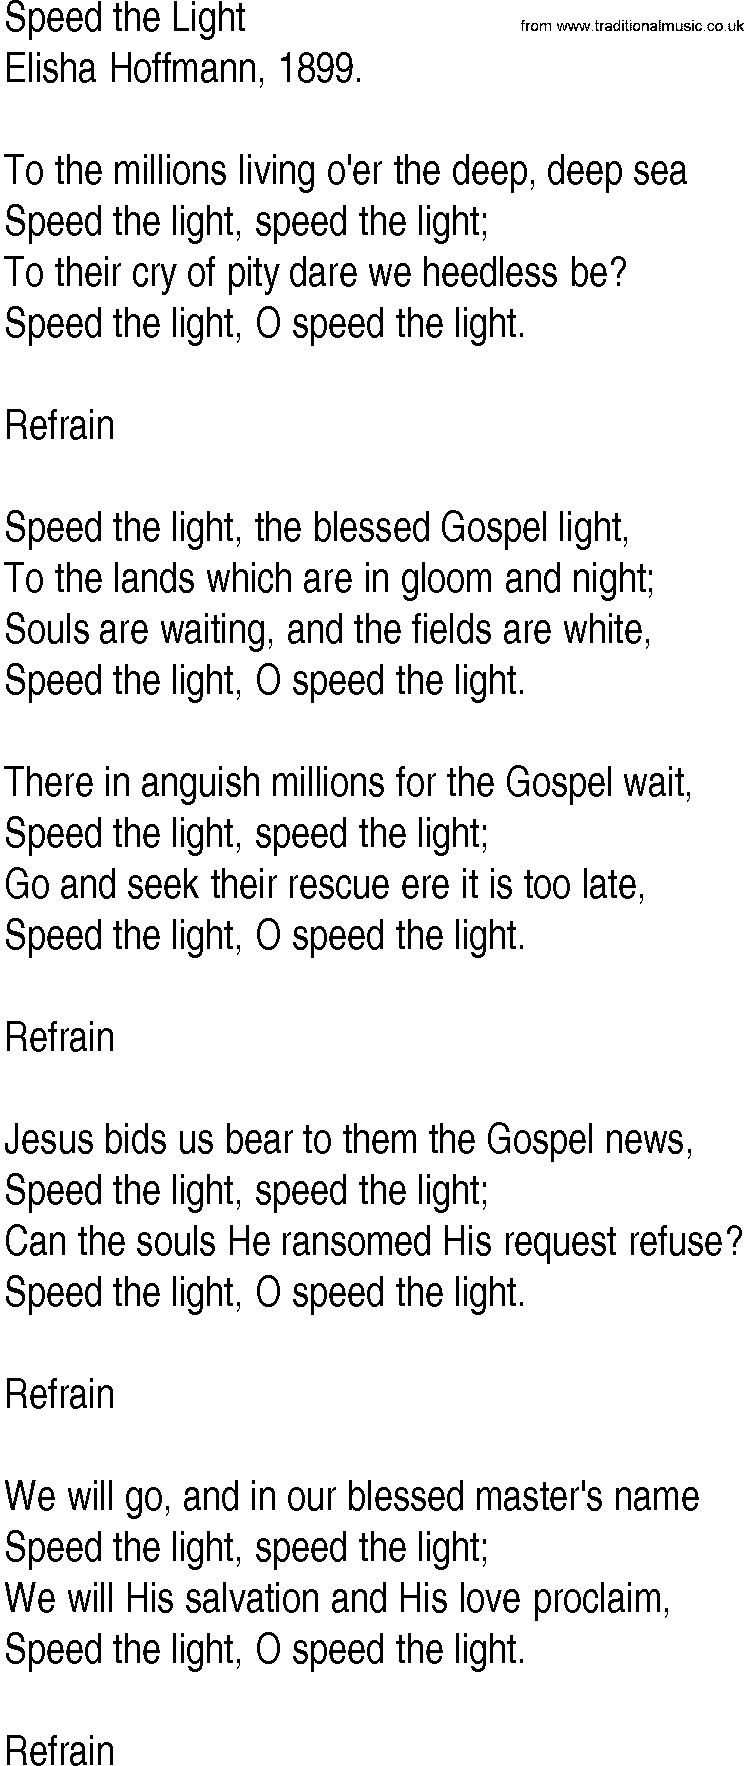 Hymn and Gospel Song: Speed the Light by Elisha Hoffmann lyrics